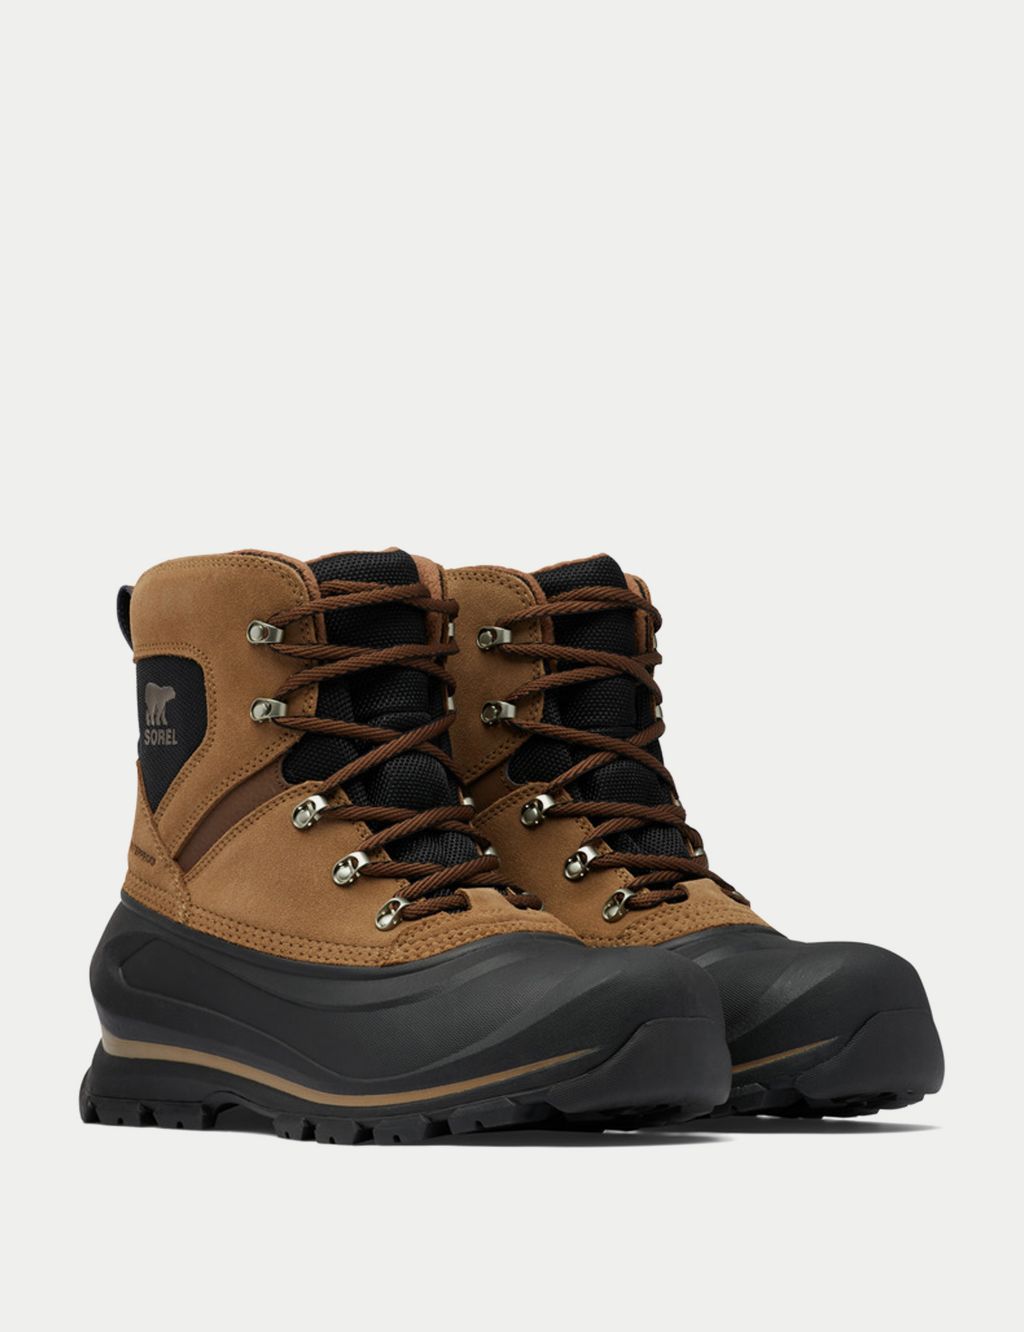 Buxton Leather Waterproof Walking Boots image 5